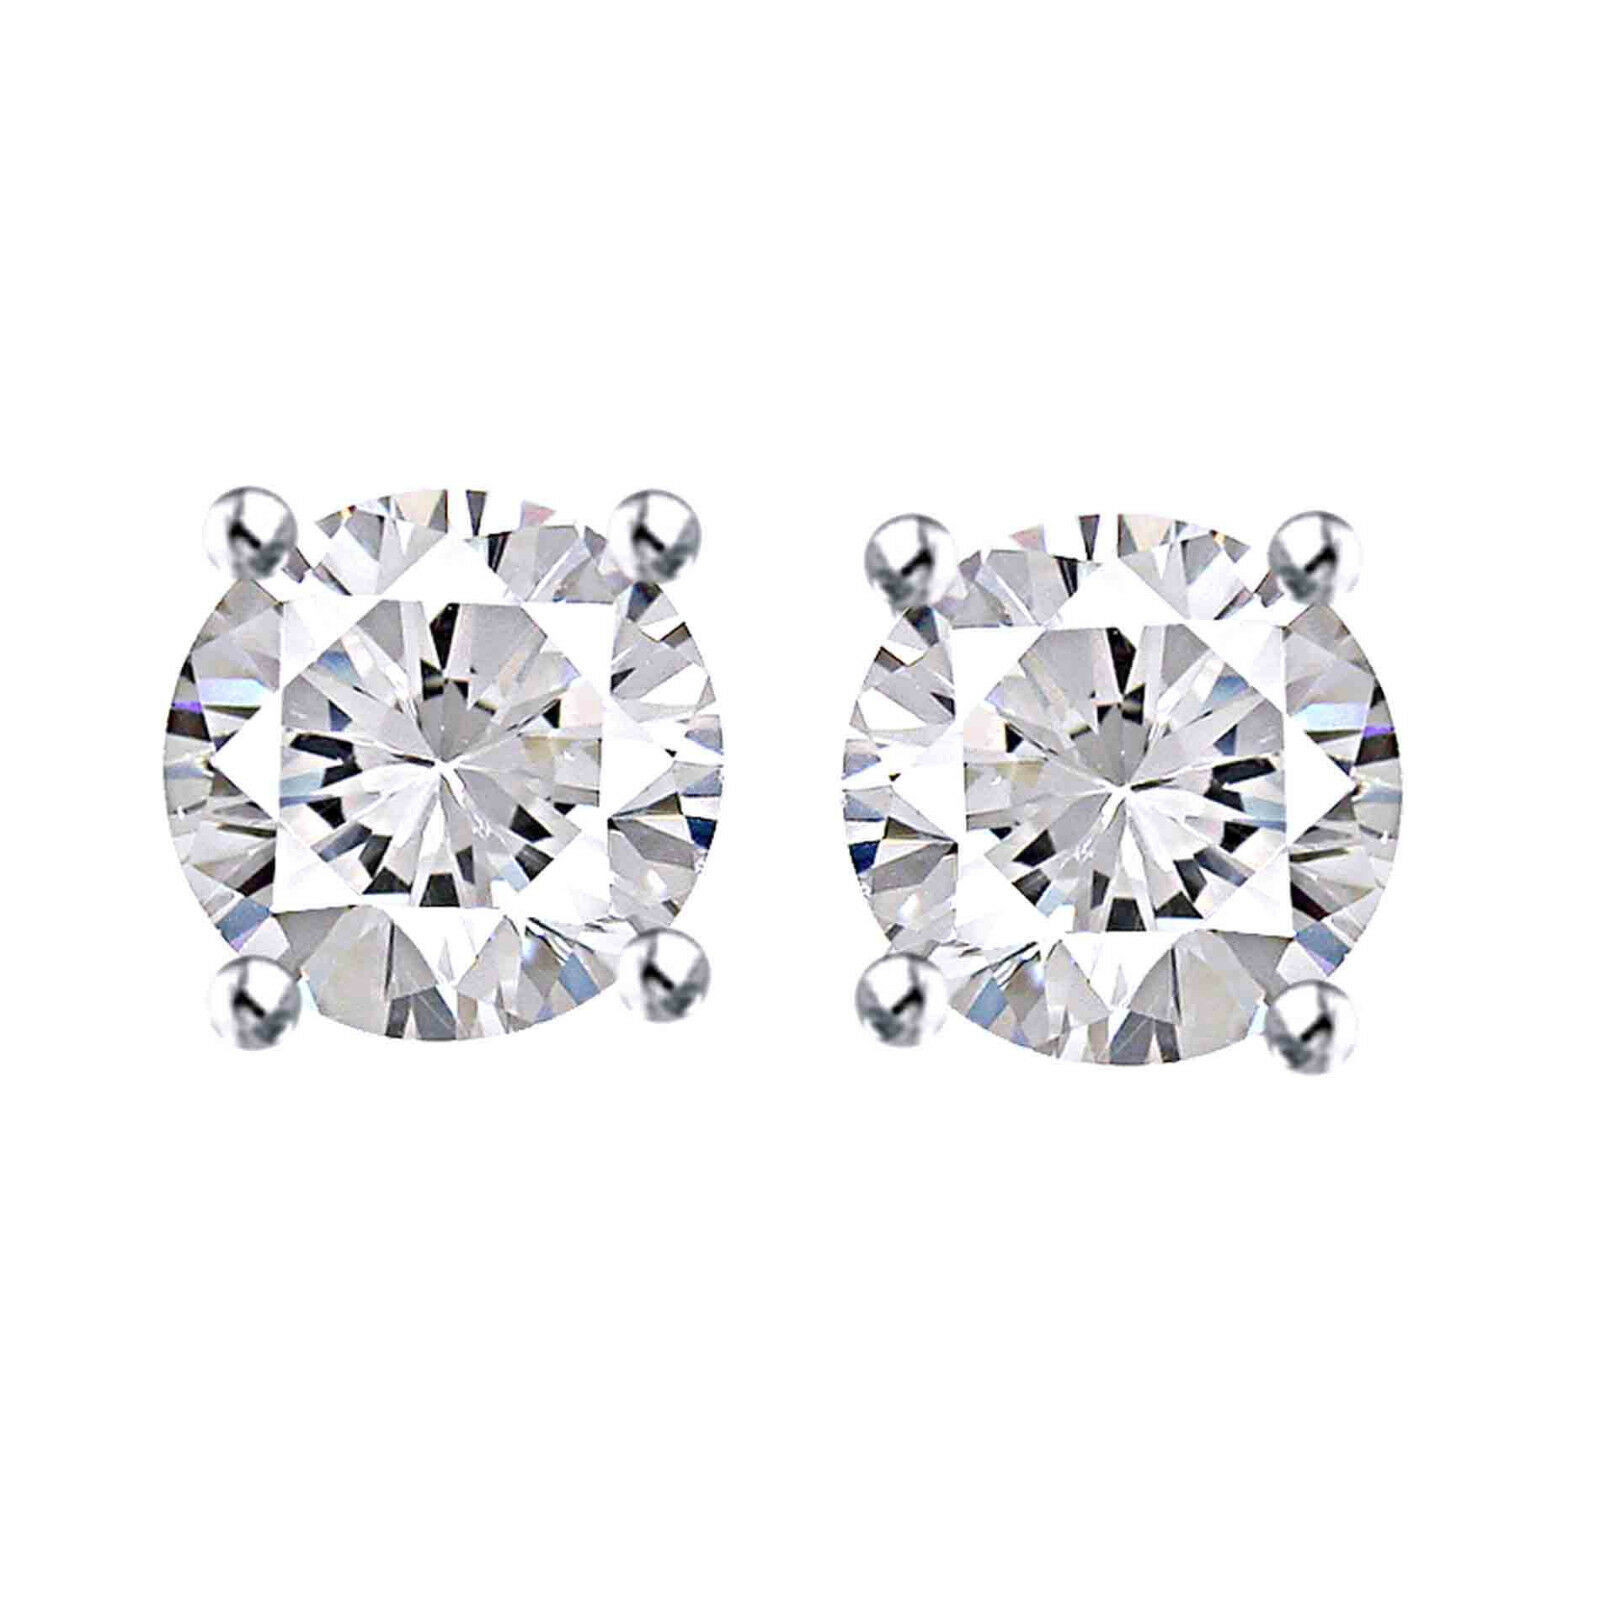 Quarter Carat Diamond Earrings
 1 4 Carat Round Cut Diamond Stud Earrings 14K White Gold